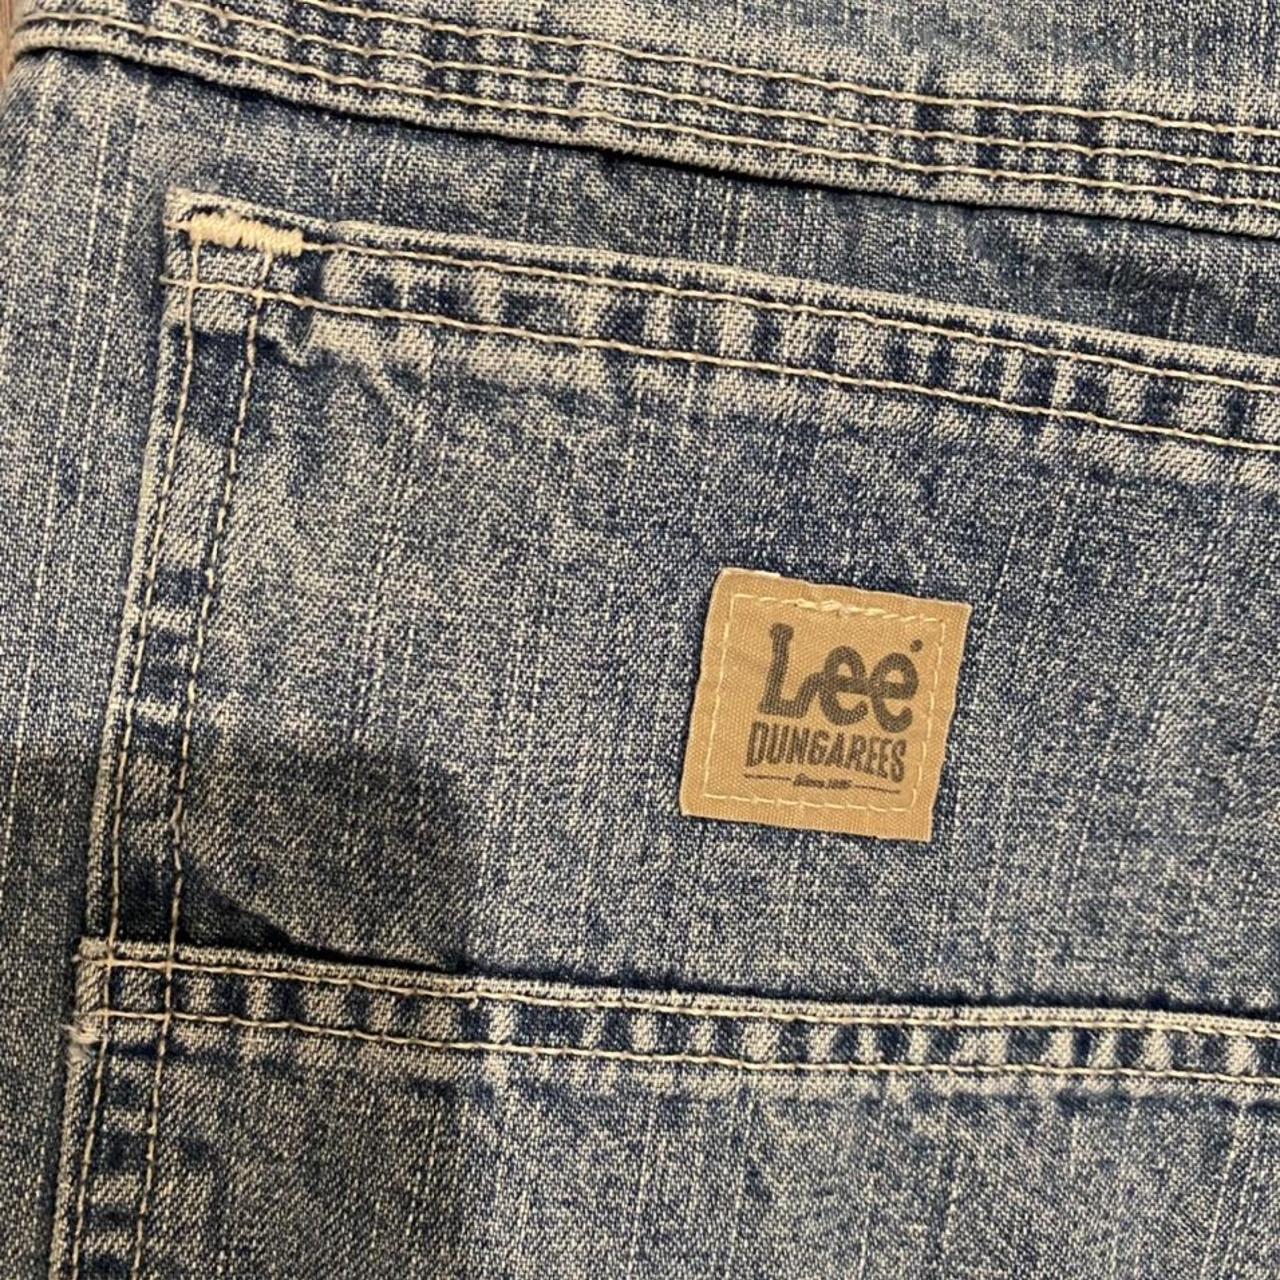 Vintage Lee carpenter jeans. Look really nice and... - Depop